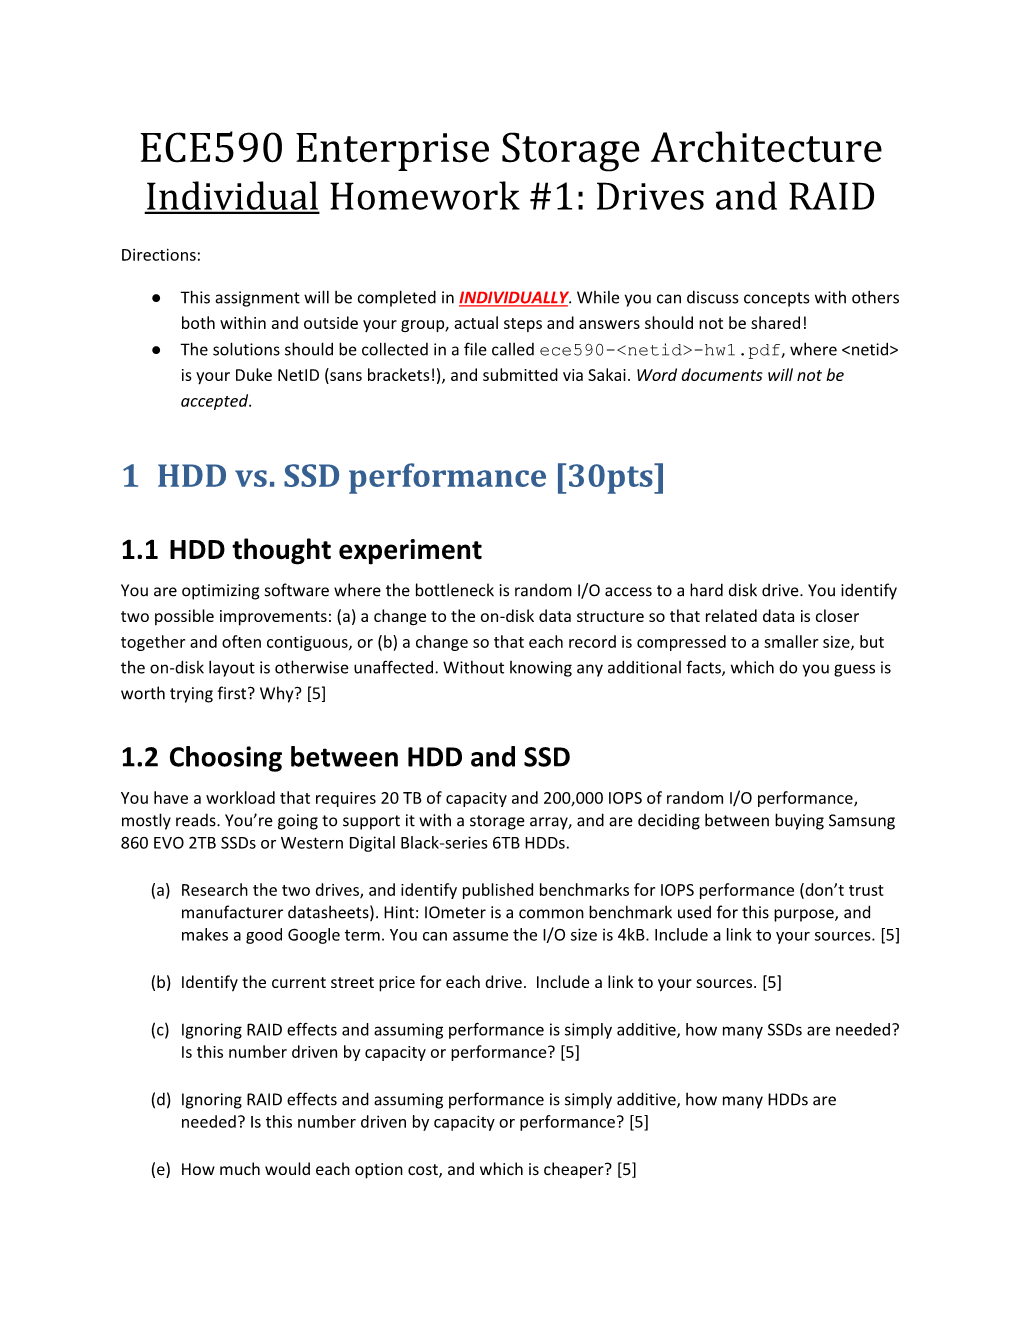 ECE590 Enterprise Storage Architecture Individual Homework #1: Drives and RAID